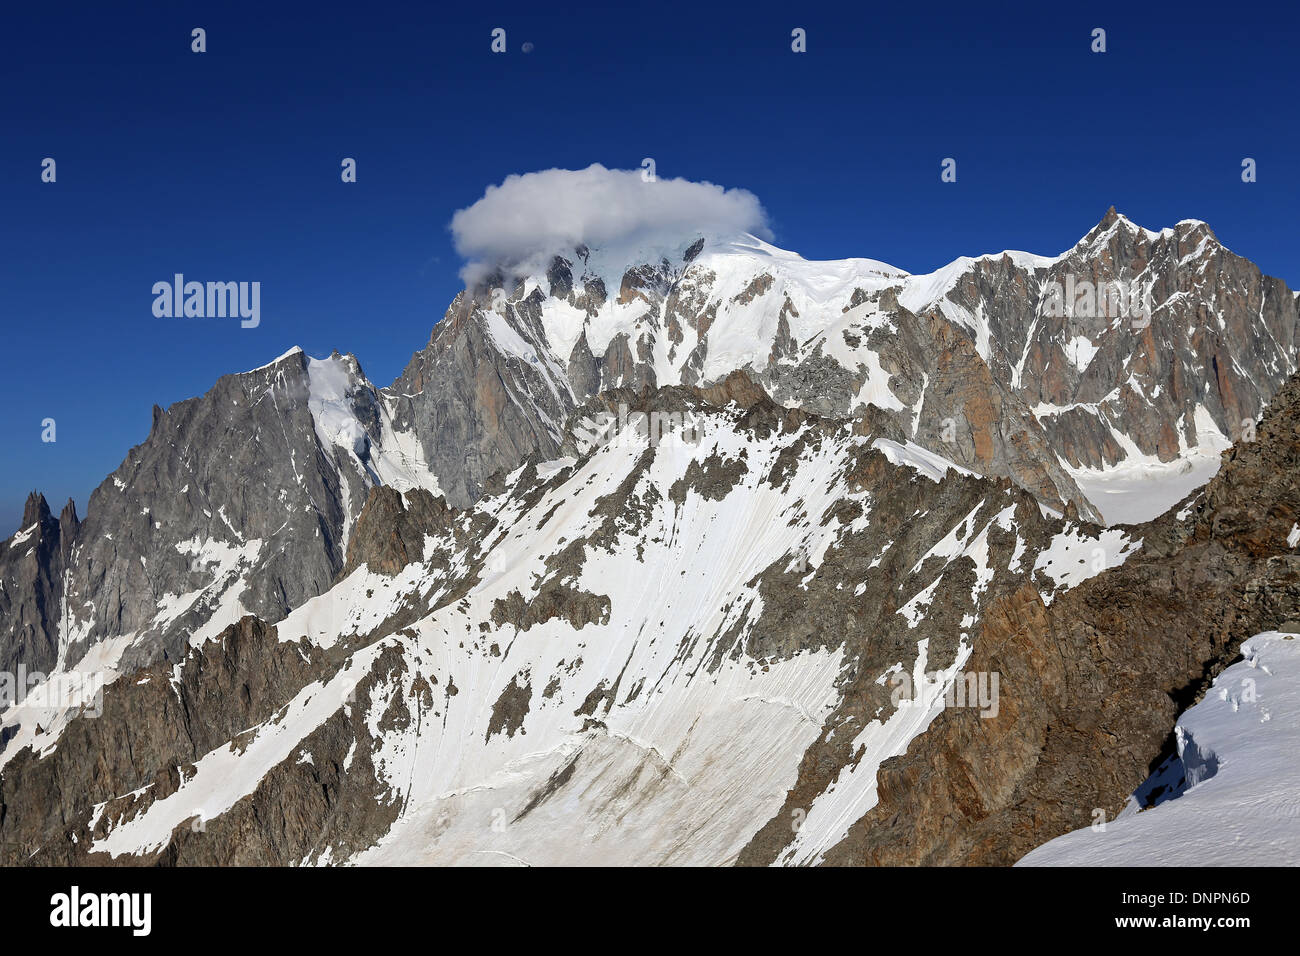 The Mont Blanc mountain massif, glaciers. Alpine landscape. Valle d'Aosta. Italian Alps. Stock Photo